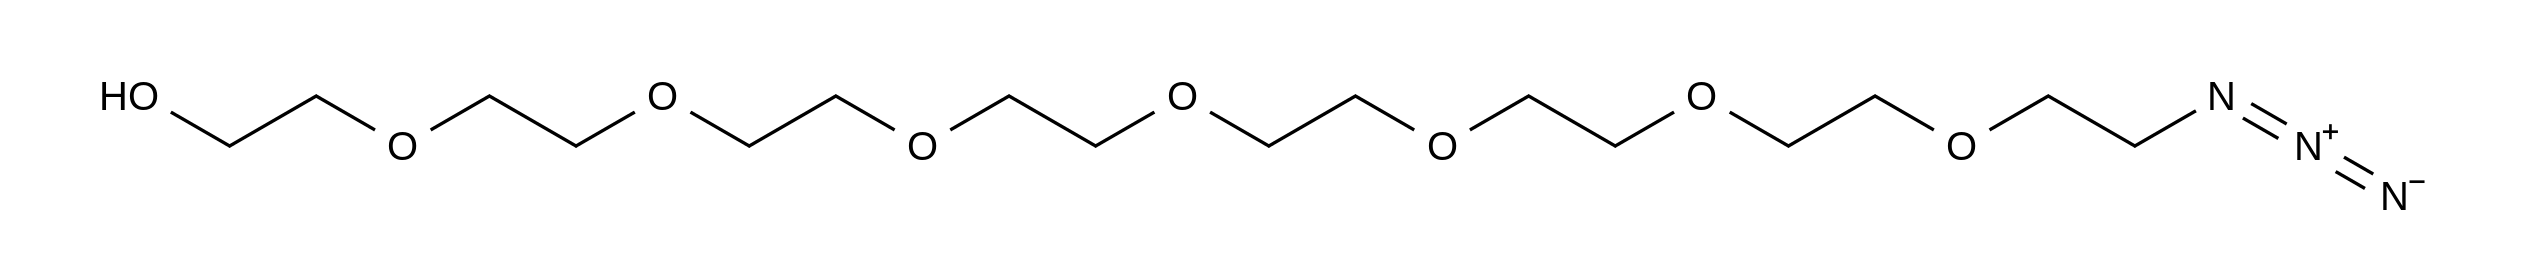 23-Azido-3,6,9,12,15,18,21-Heptaoxatricosan-1-ol